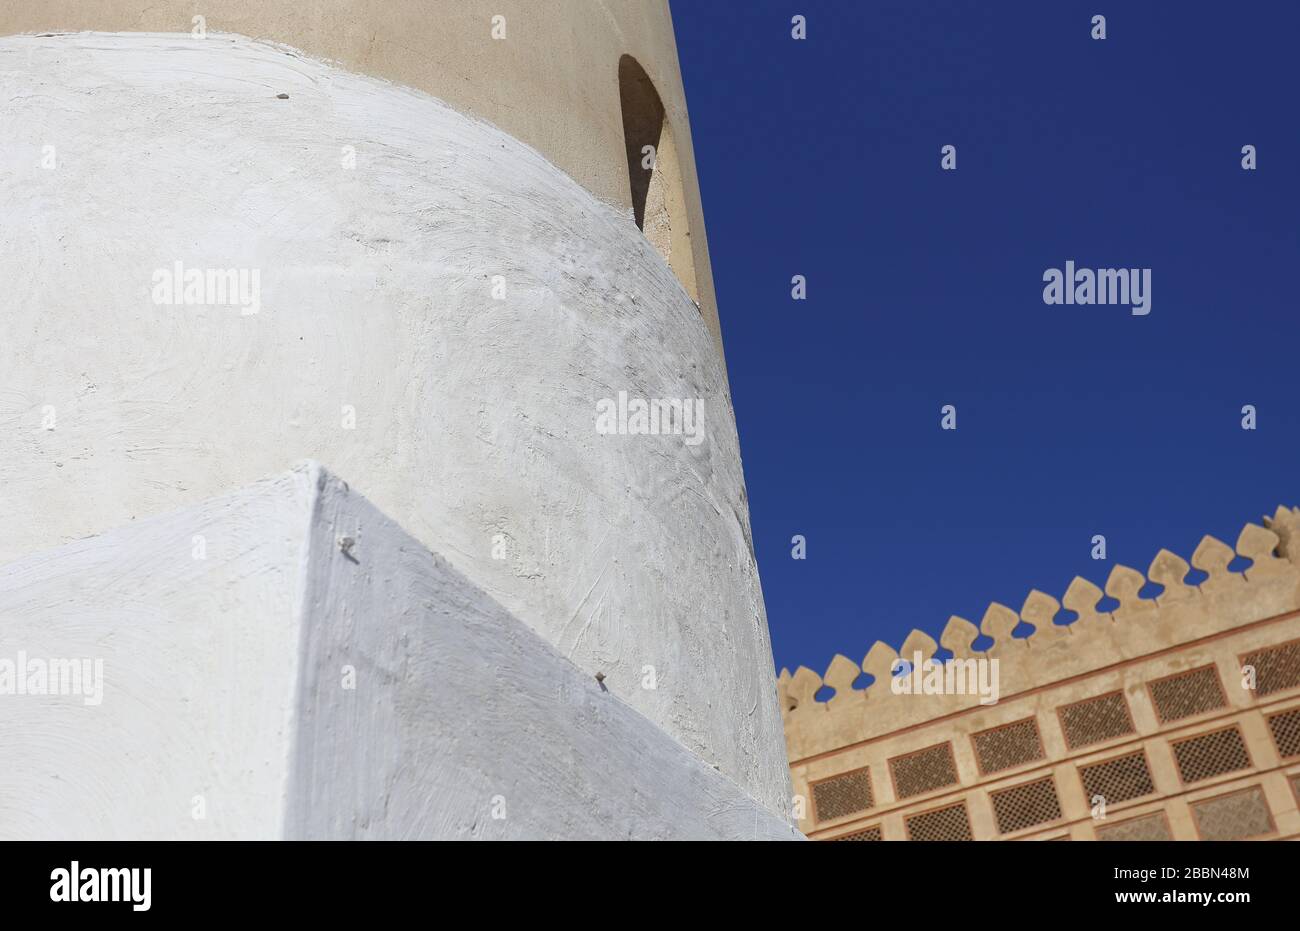 Minaret de la Mosquée Siyadi avec la Maison Siyadi derrière, Bahreïn Pearl Trail, Muharraq, Royaume de Bahreïn Banque D'Images